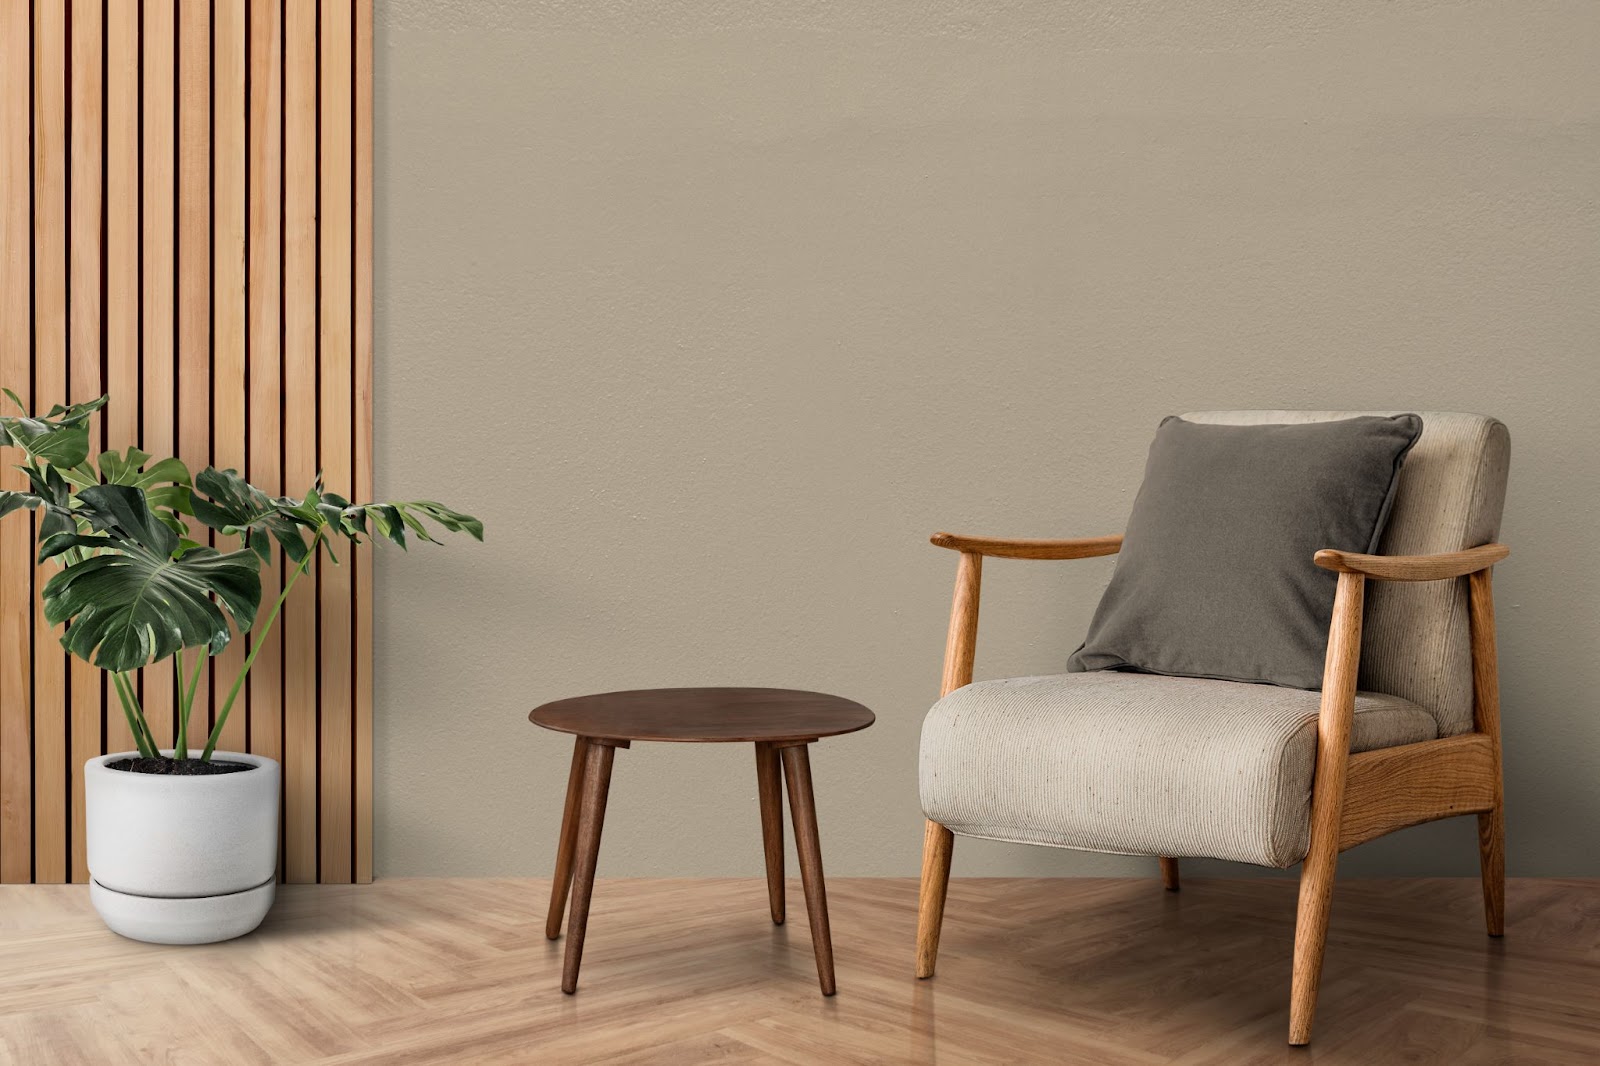 house-with-hardwood-floor-chair-table-plant